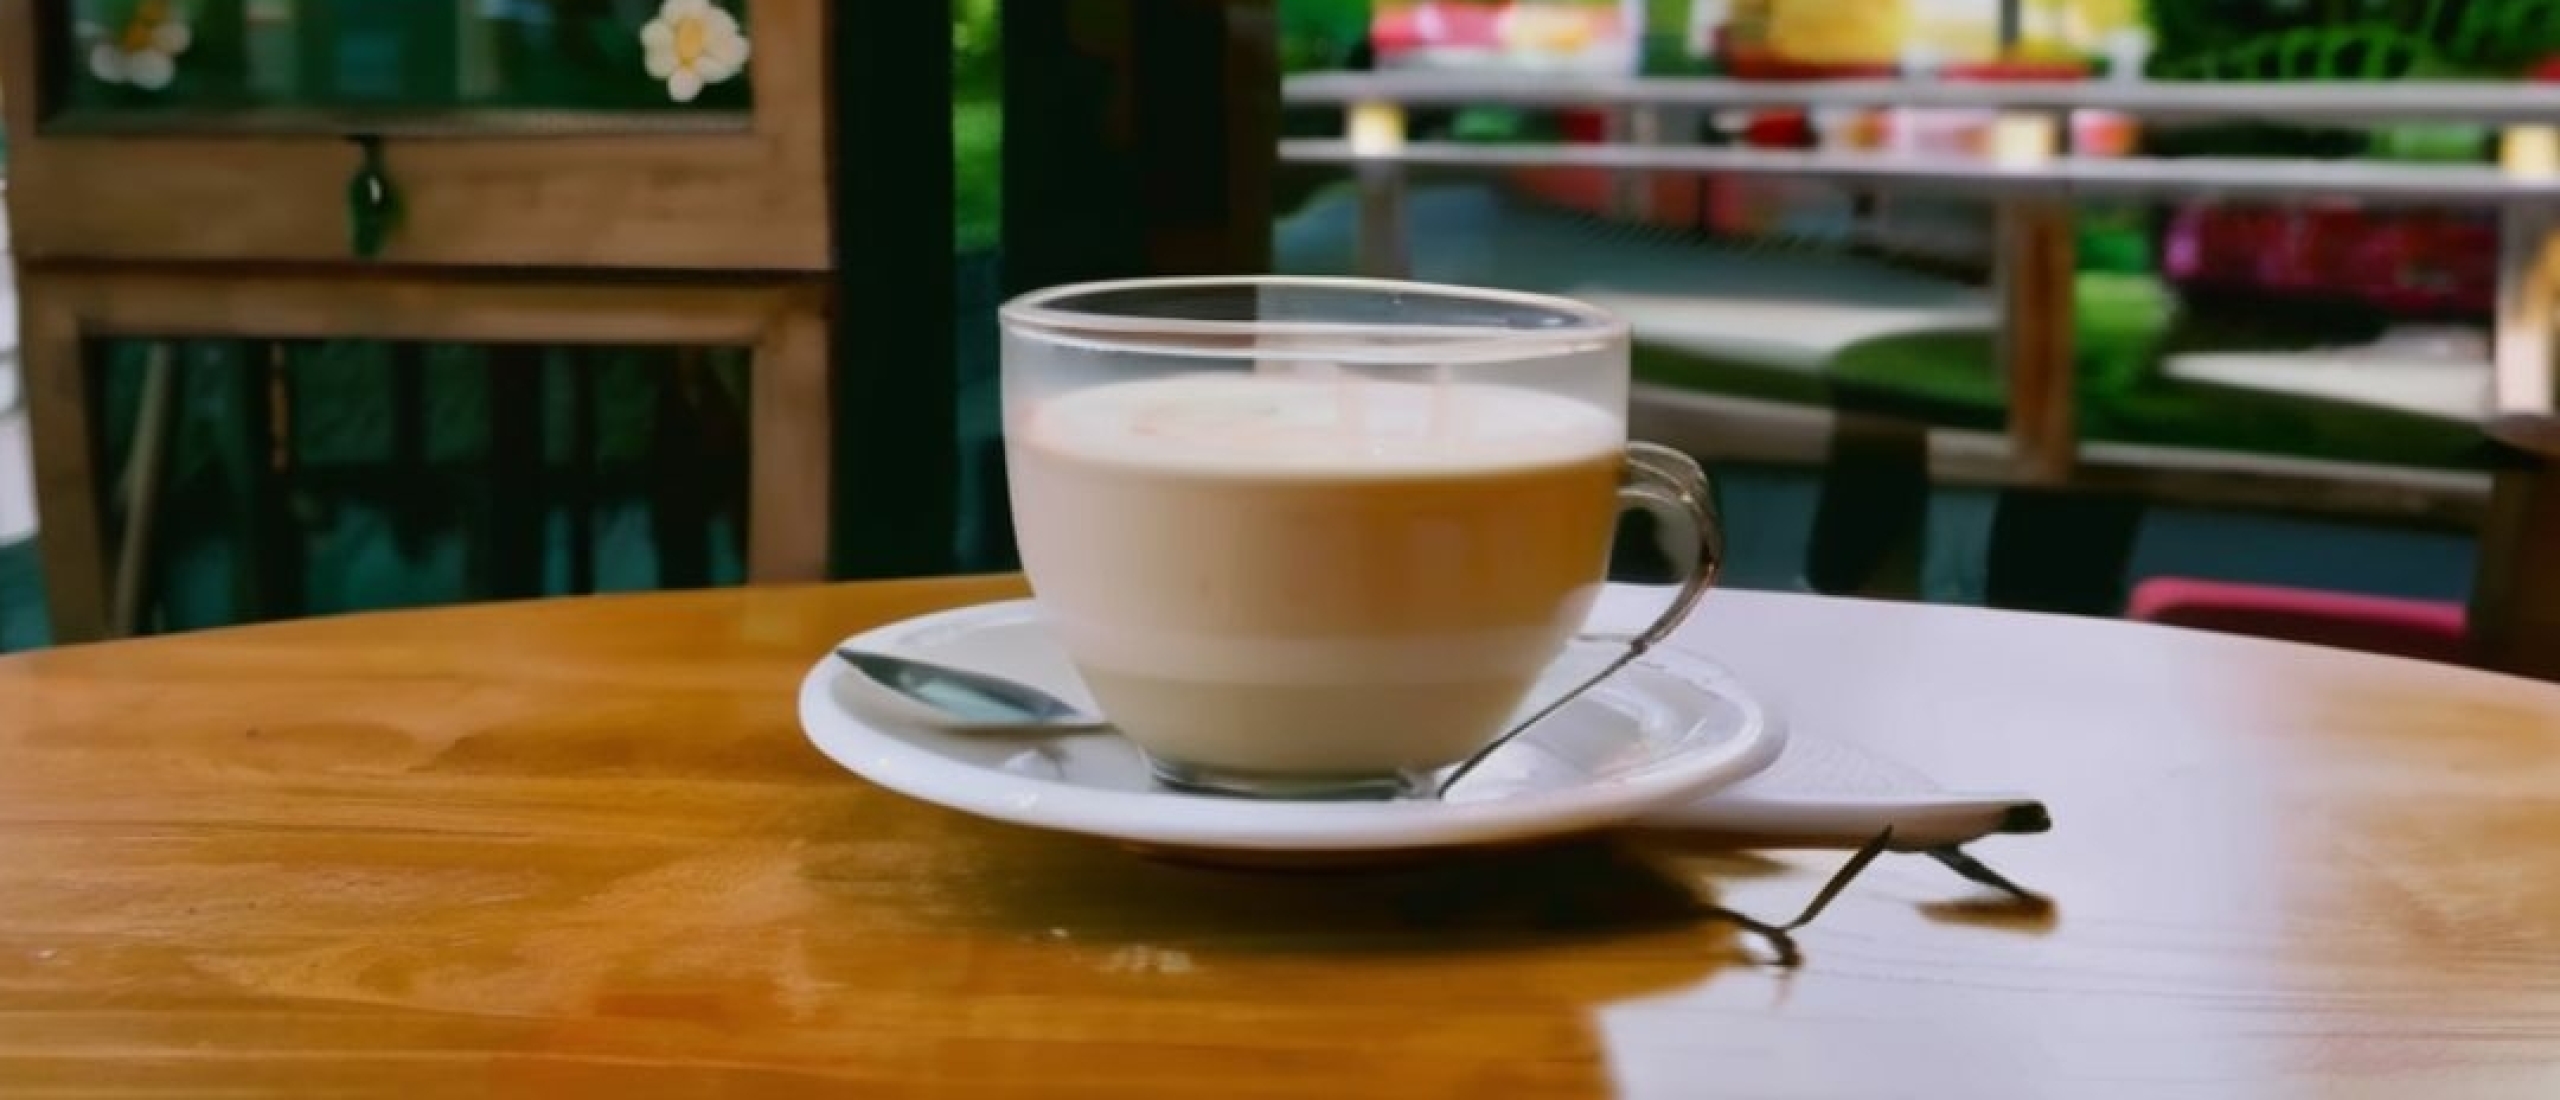 Hoe maak je de perfecte chai latte